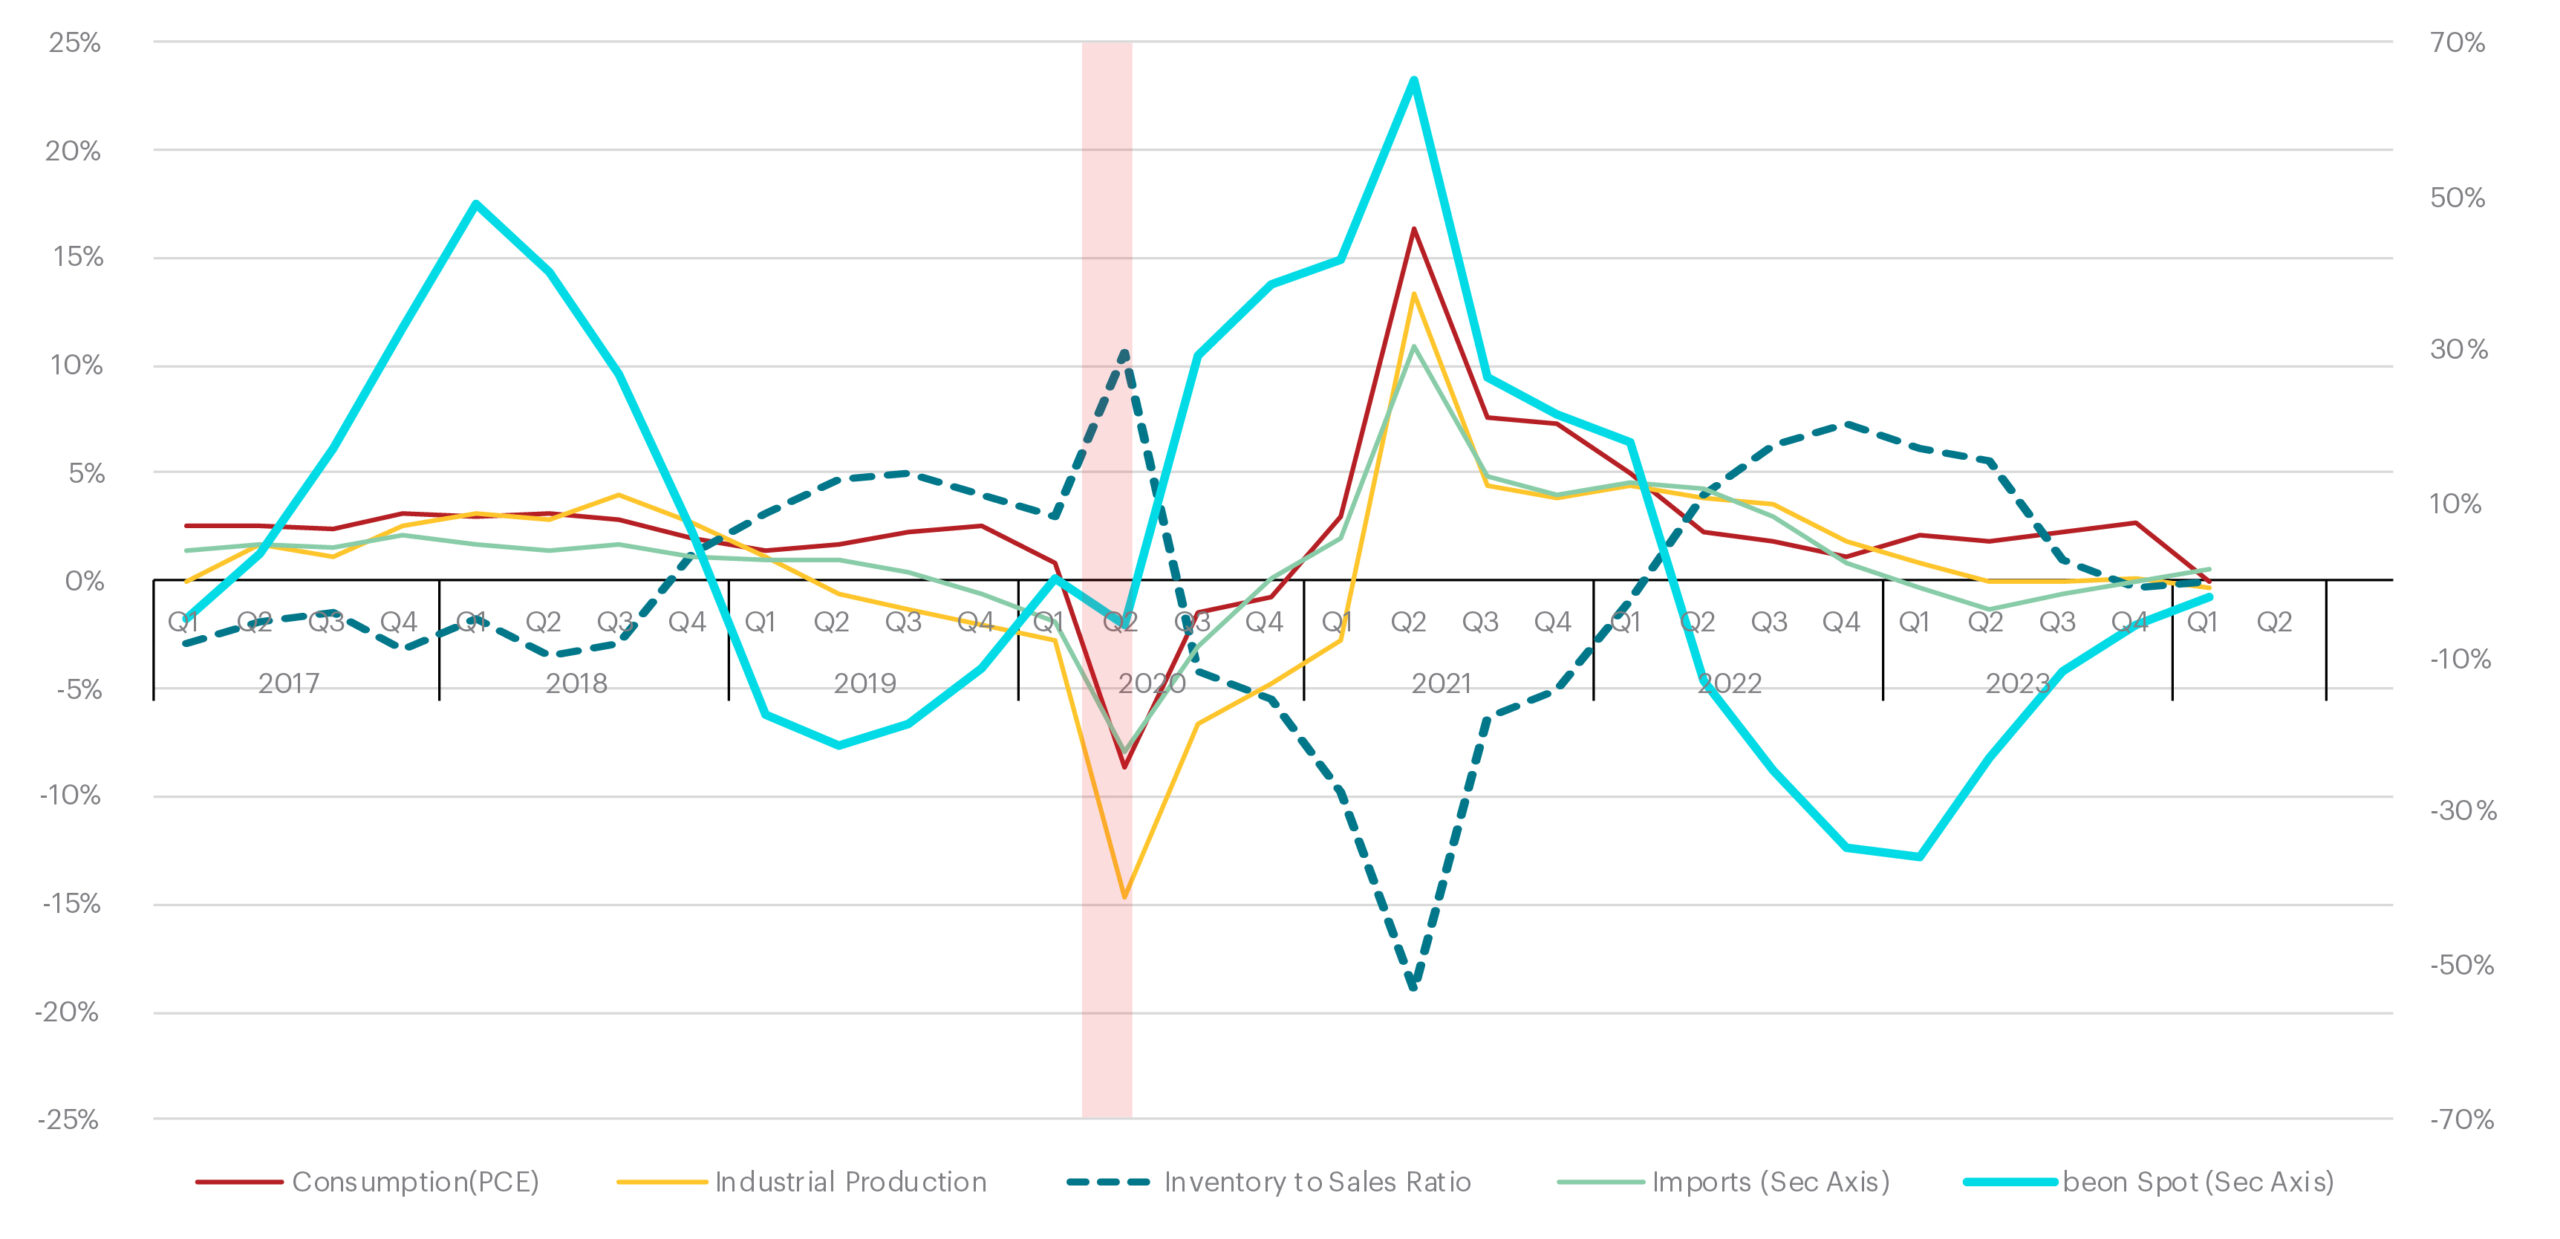 Q2 Outlook Beon Band vs Economic Indicators